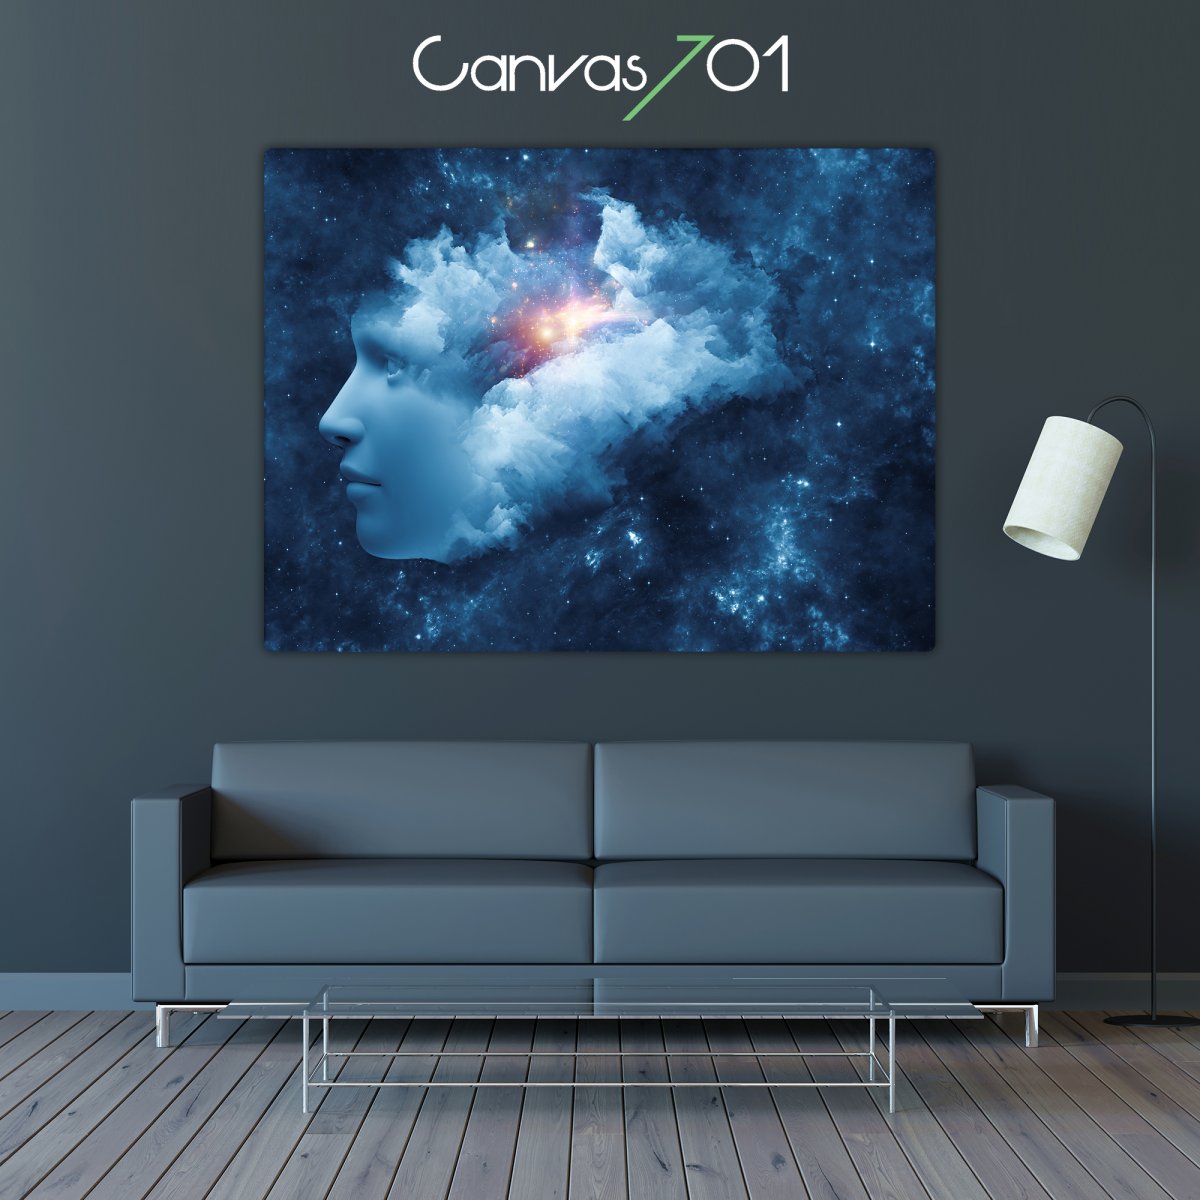 Canvas701 | Uzay ve İnsan Kanvas Tablo